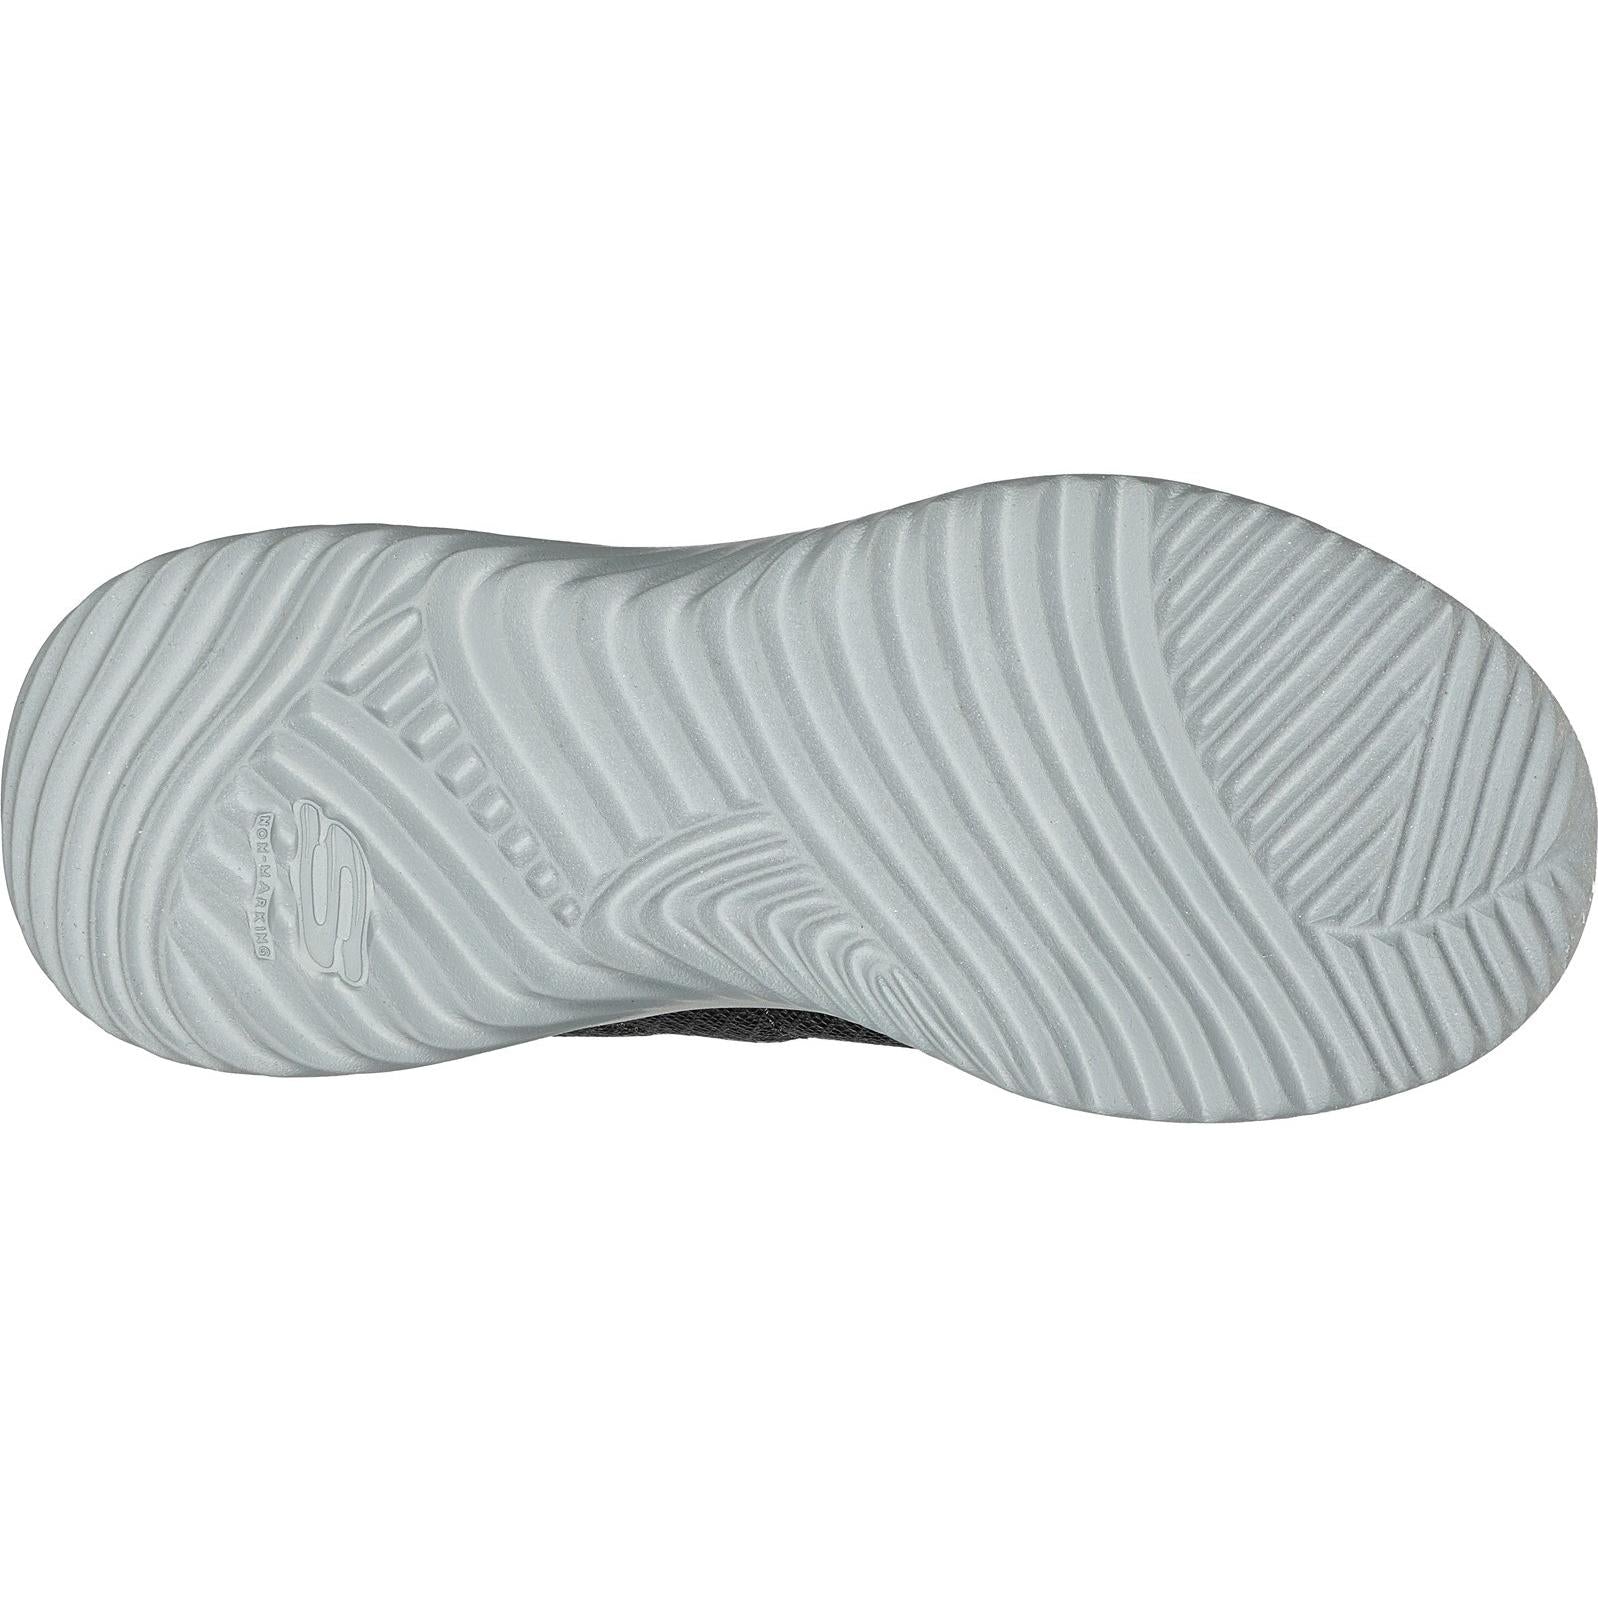 Skechers Bounder - Karonik Shoe